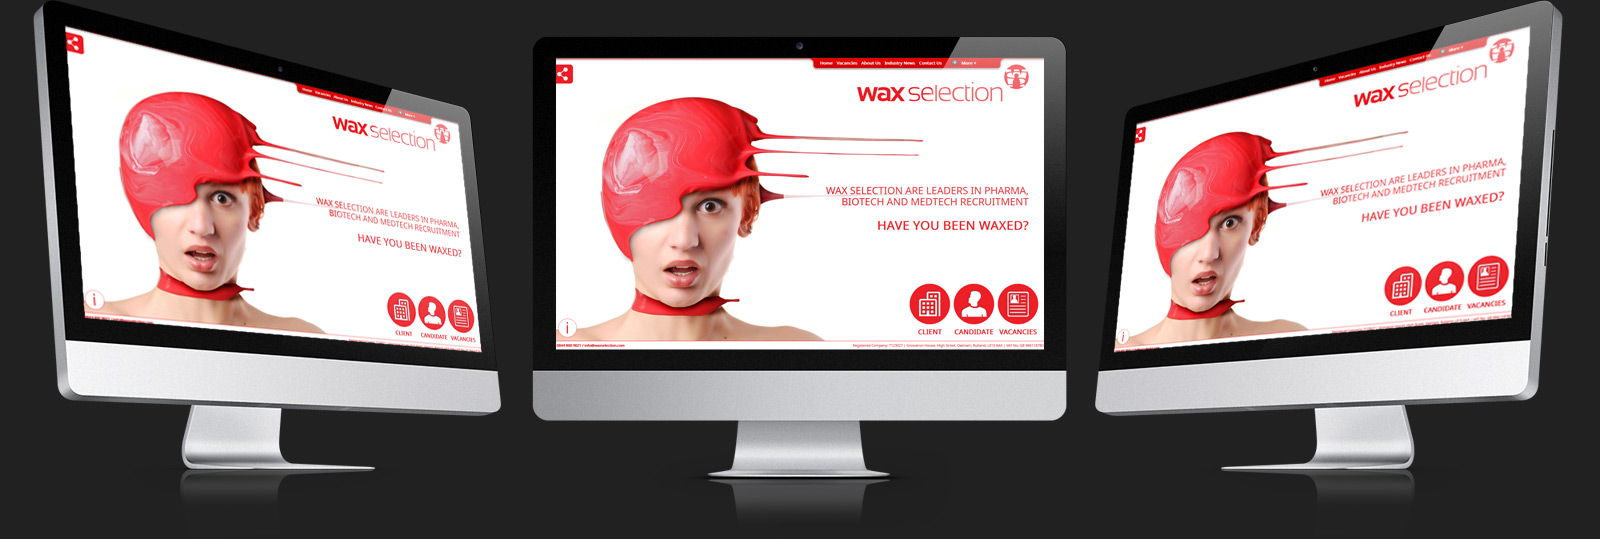 Stamford Web Design - Wax Selection